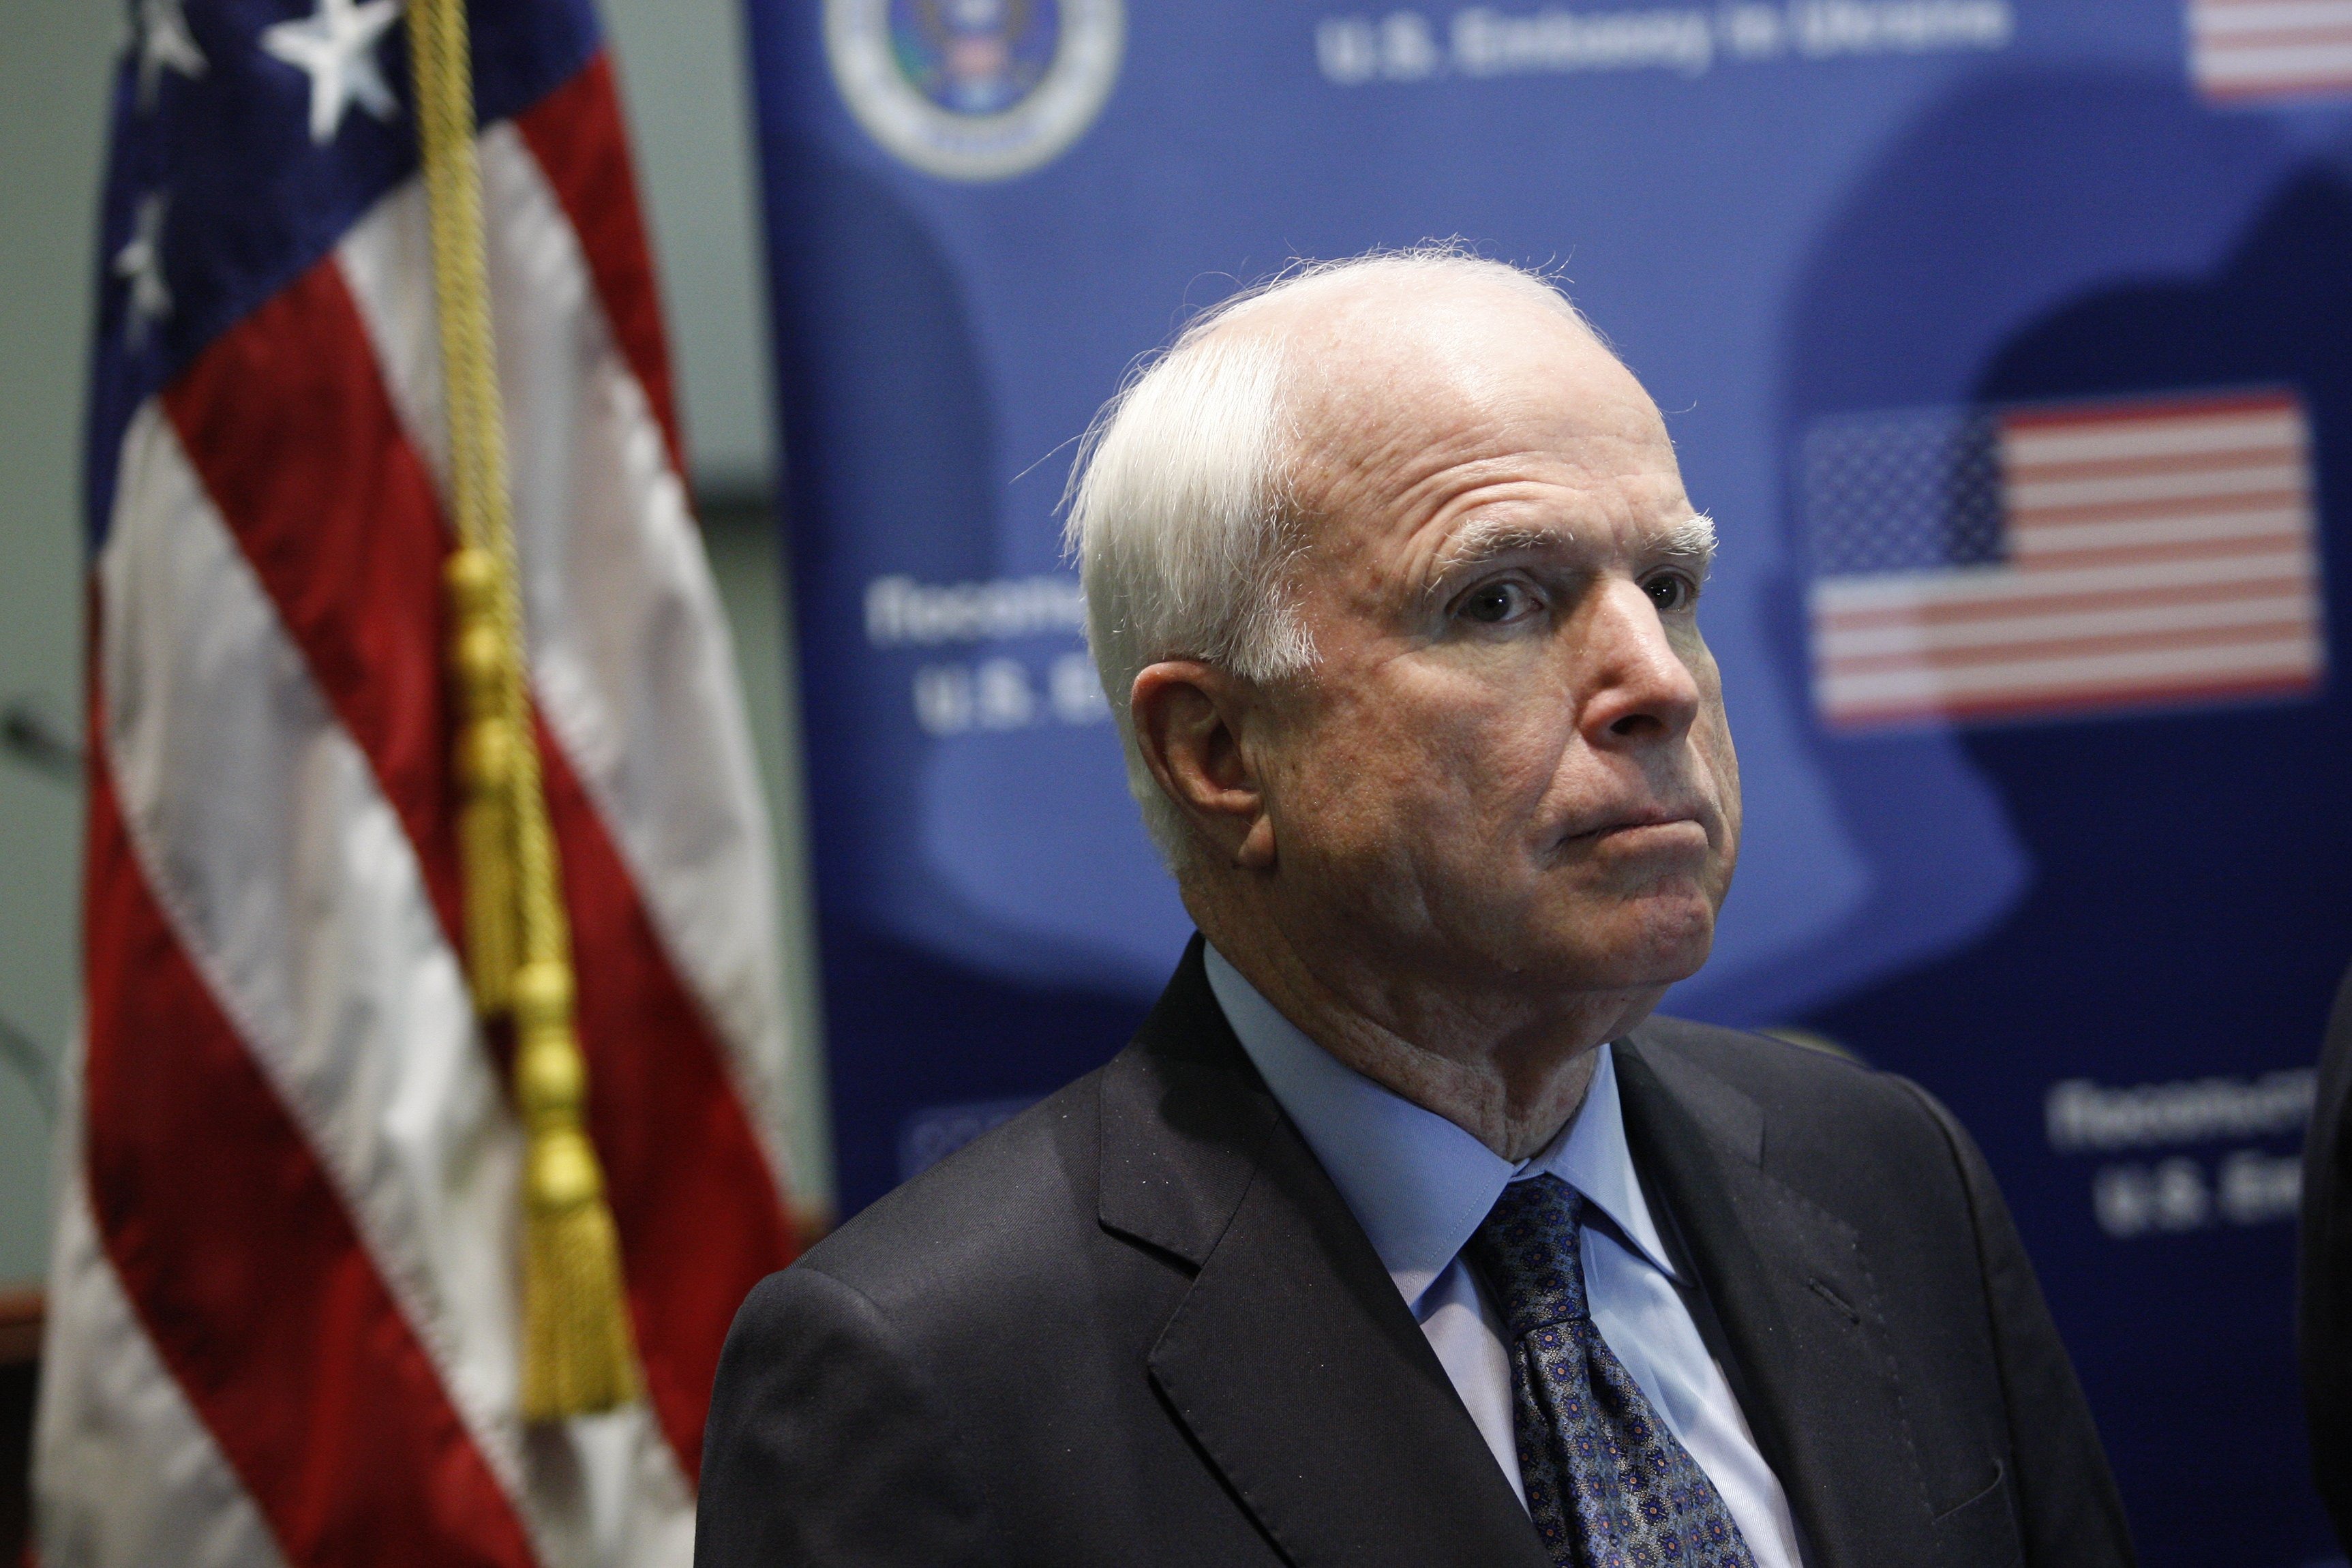 Senator John McCain speaks at a news conference in Kiev, Ukraine, March 15, 2014. (Nikitin Maxim&mdash;ITAR-TASS/Corbis)